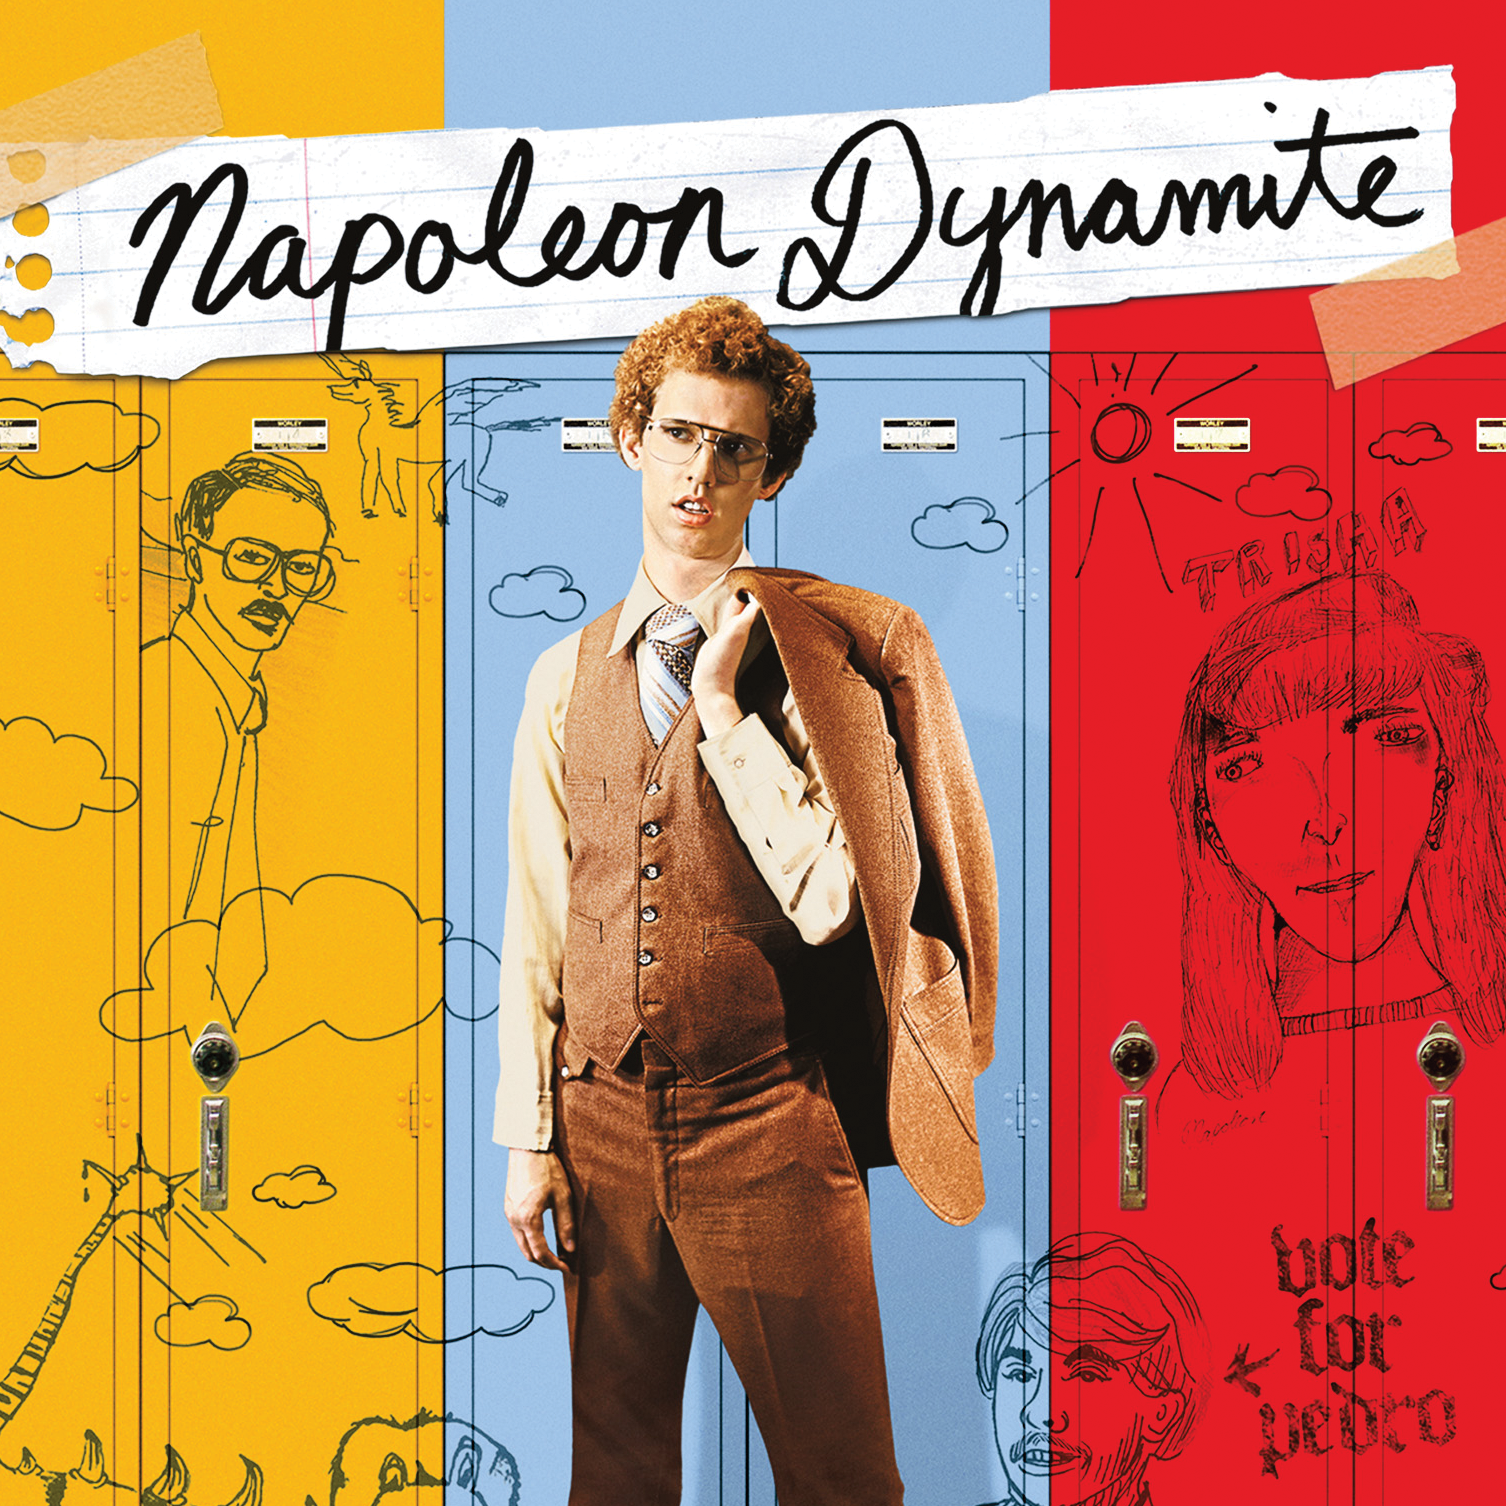 8 High School/ College Comedy DVD Movies - Napoleon Dynamite, Bookies,  Cheats